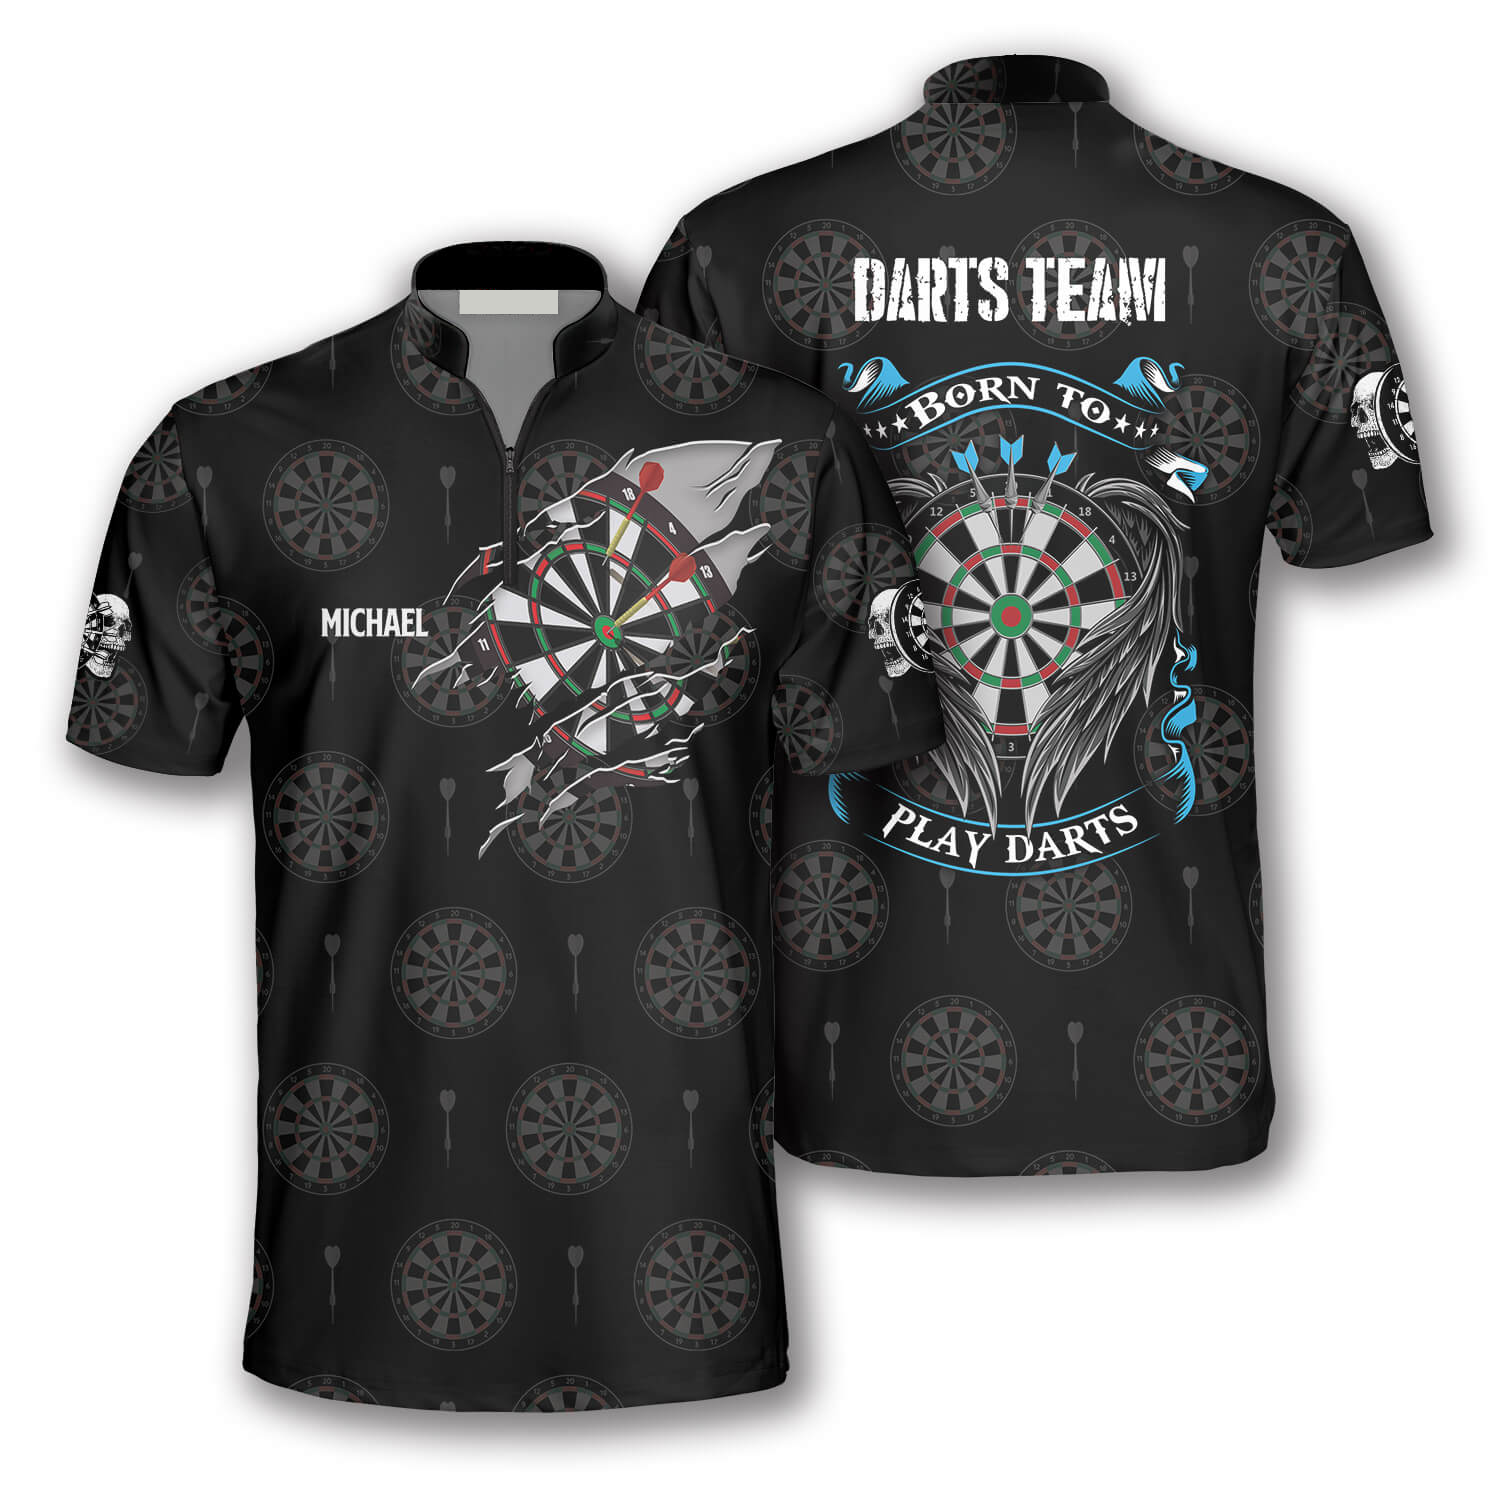 Born to Play Darts Custom Darts Jerseys for Men/ Personalized Name Dart 3D Shirt